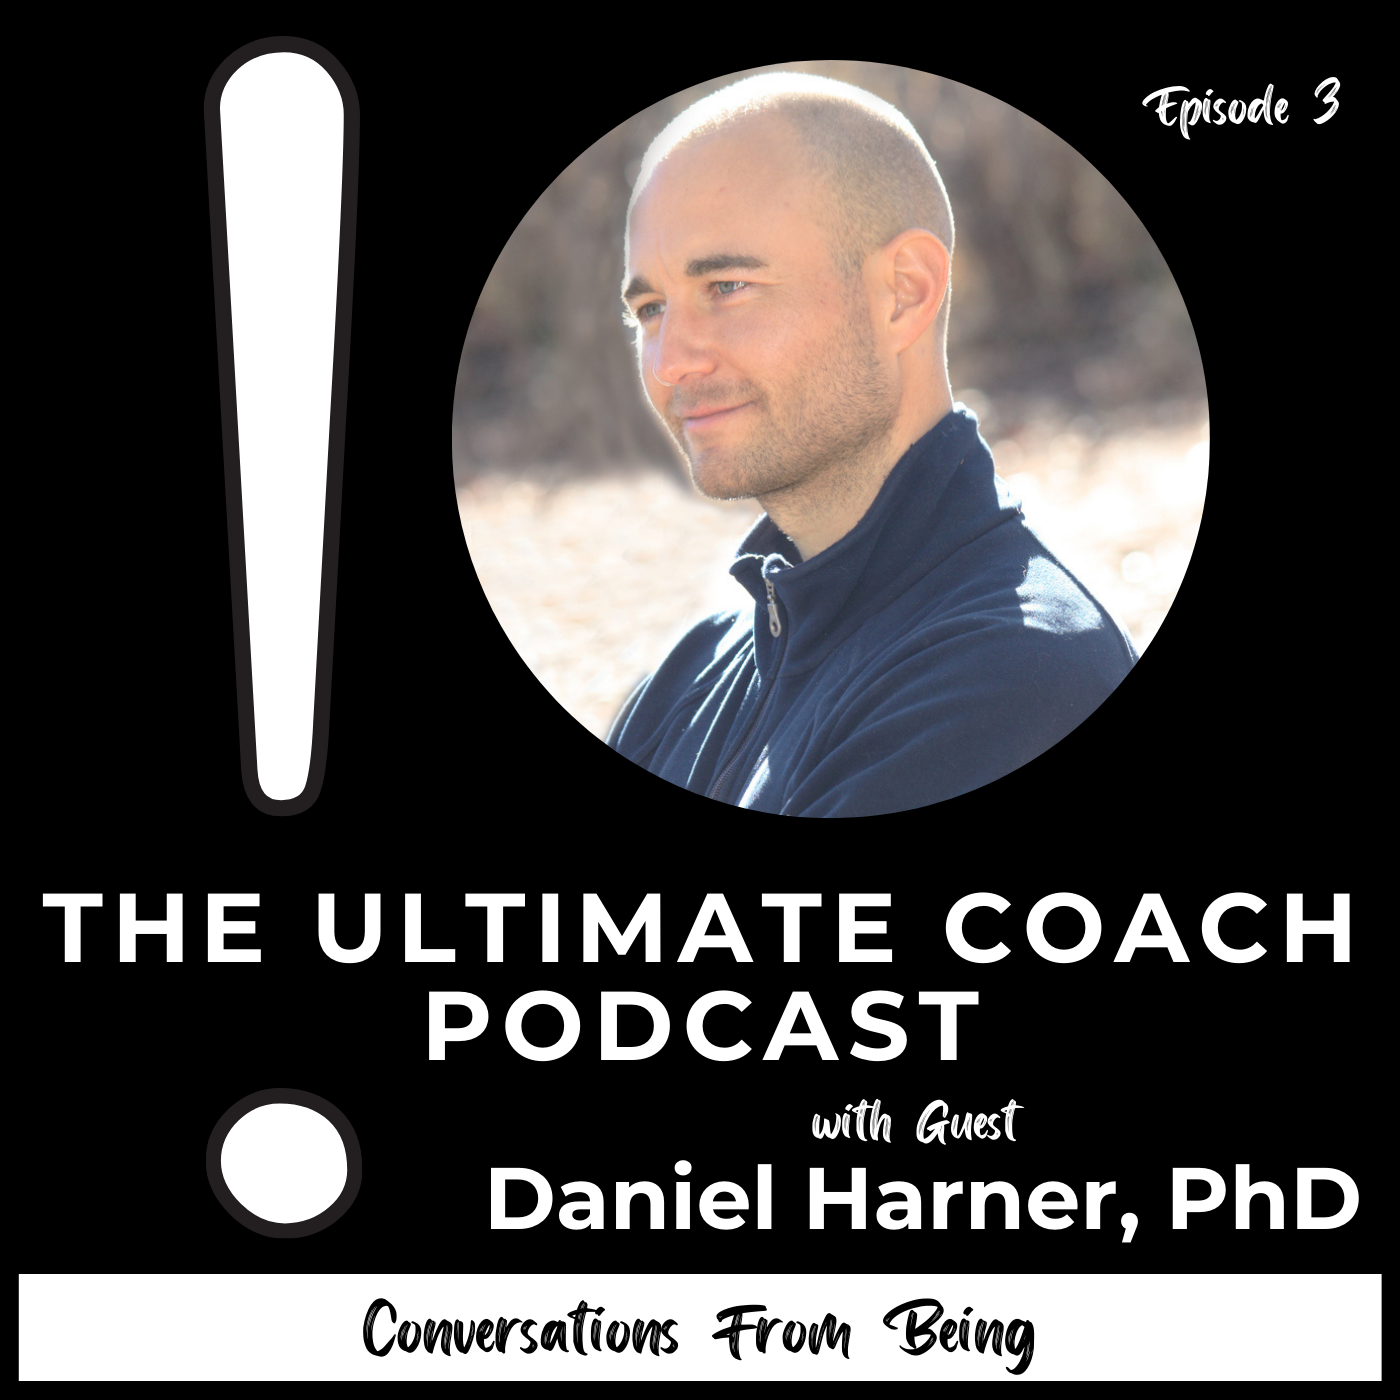 “I’d rather be a human-BEing” - Dr. Daniel Harner